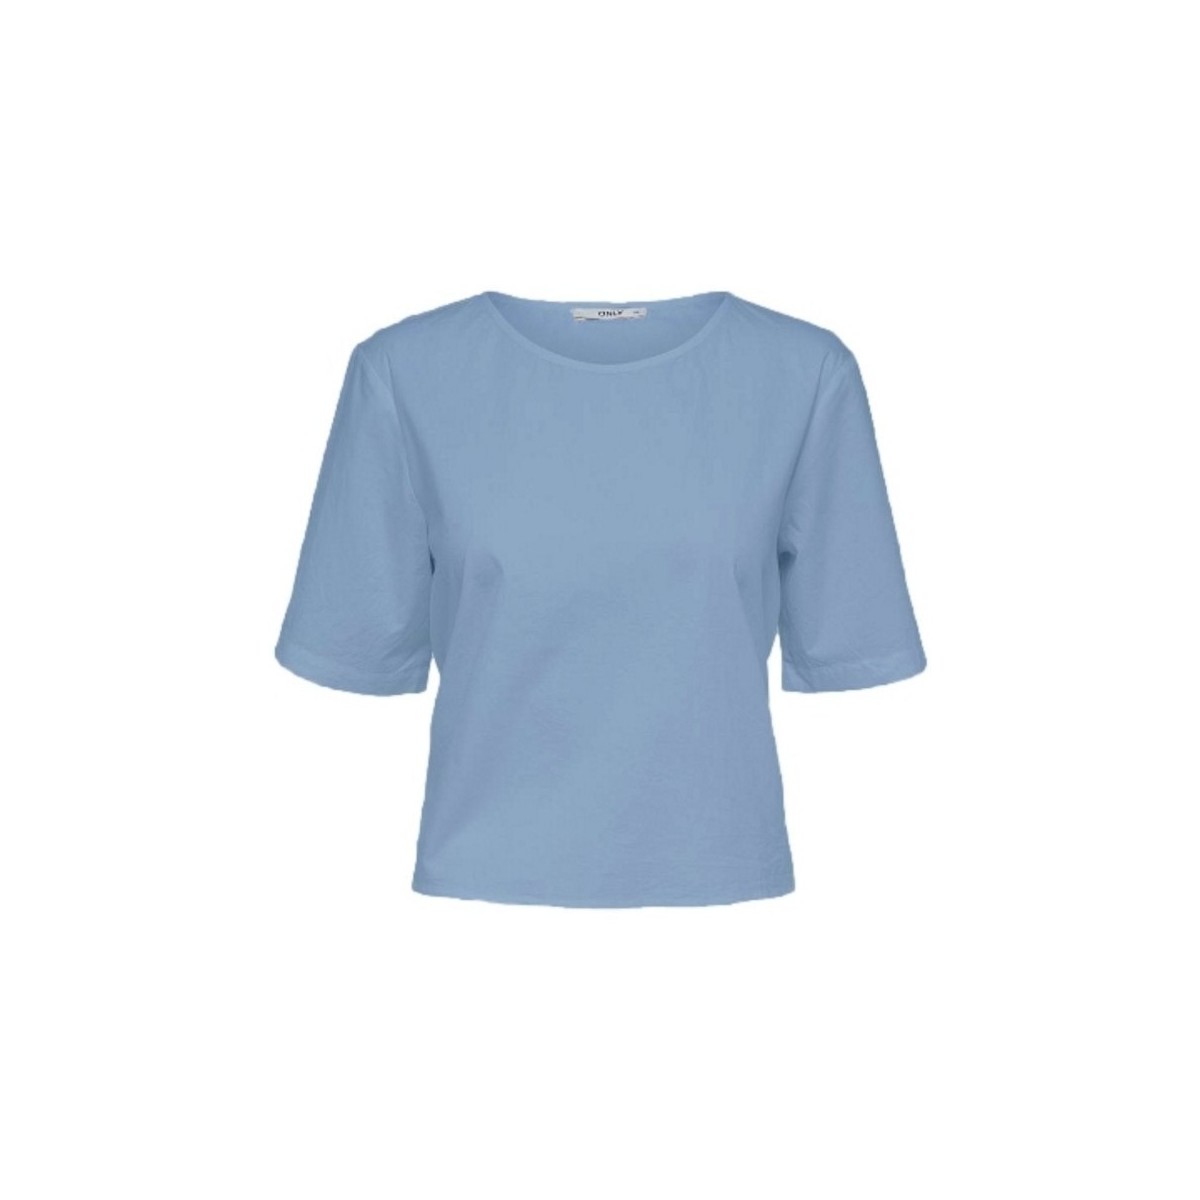 Vêtements Femme Tops / Blouses Only Ray Top - Cashmere Blue Bleu